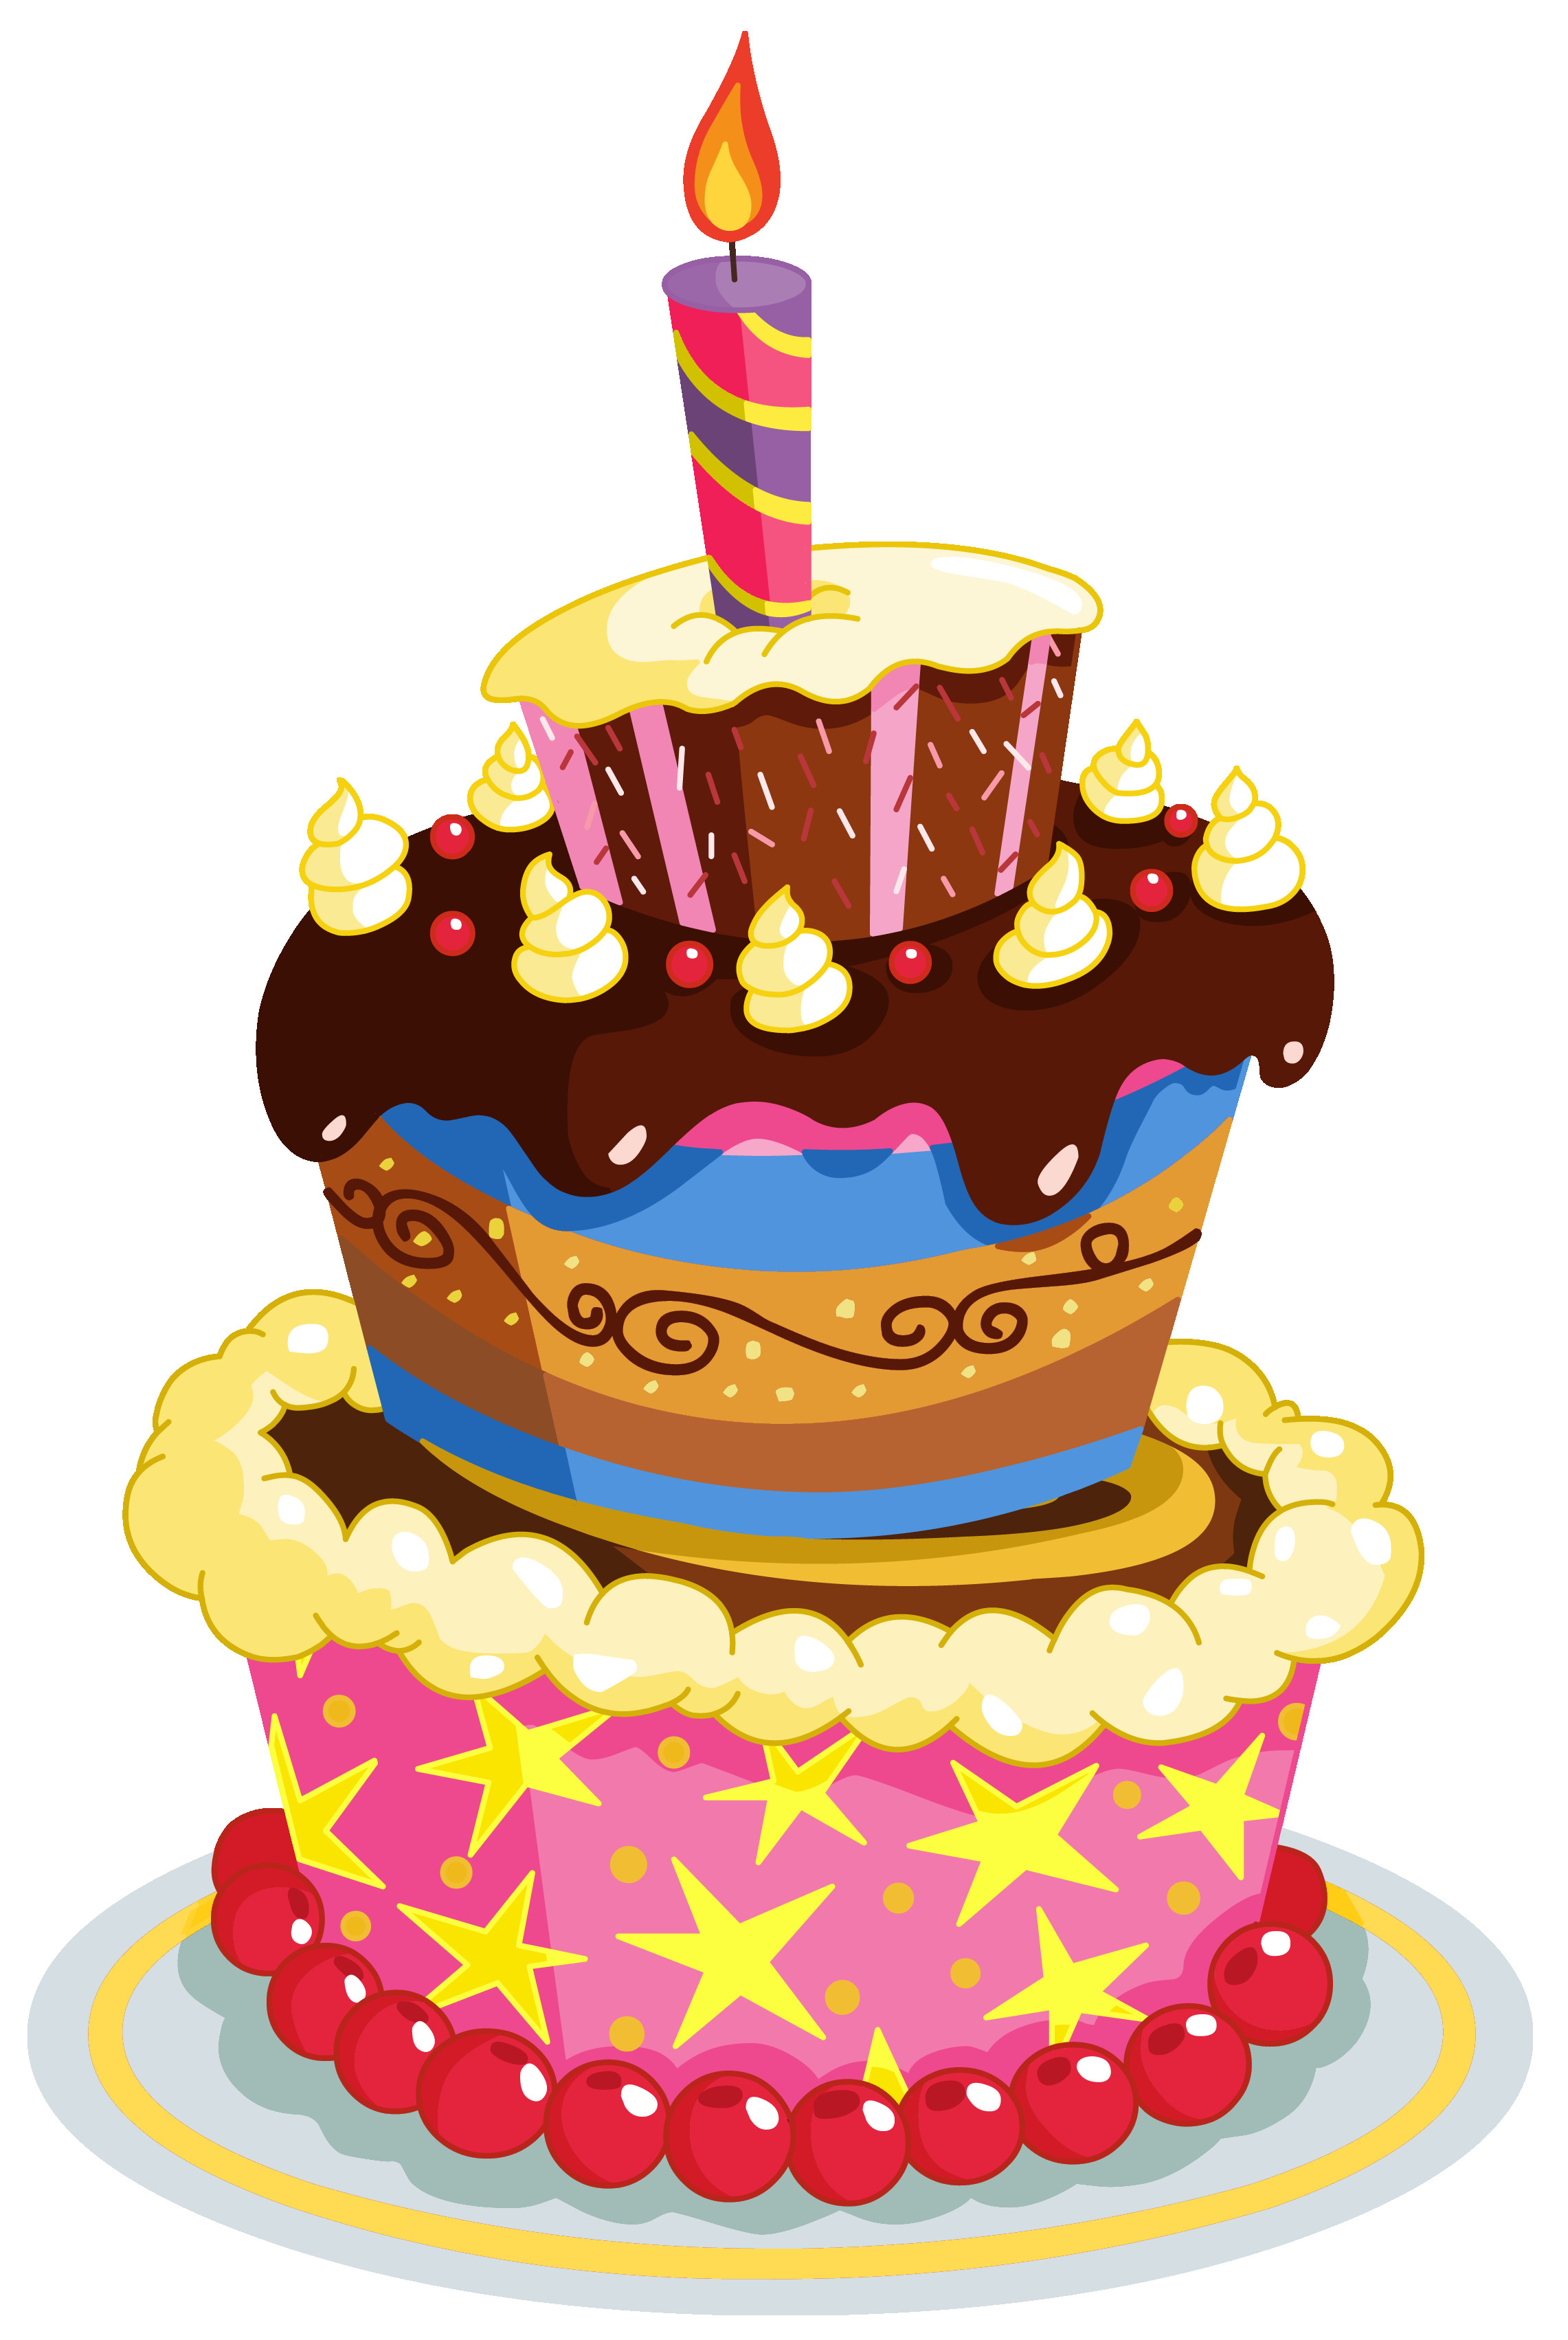 Clipart Birthday Cake
 BIRTHDAY CAKE CLIPART Fomanda Gasa